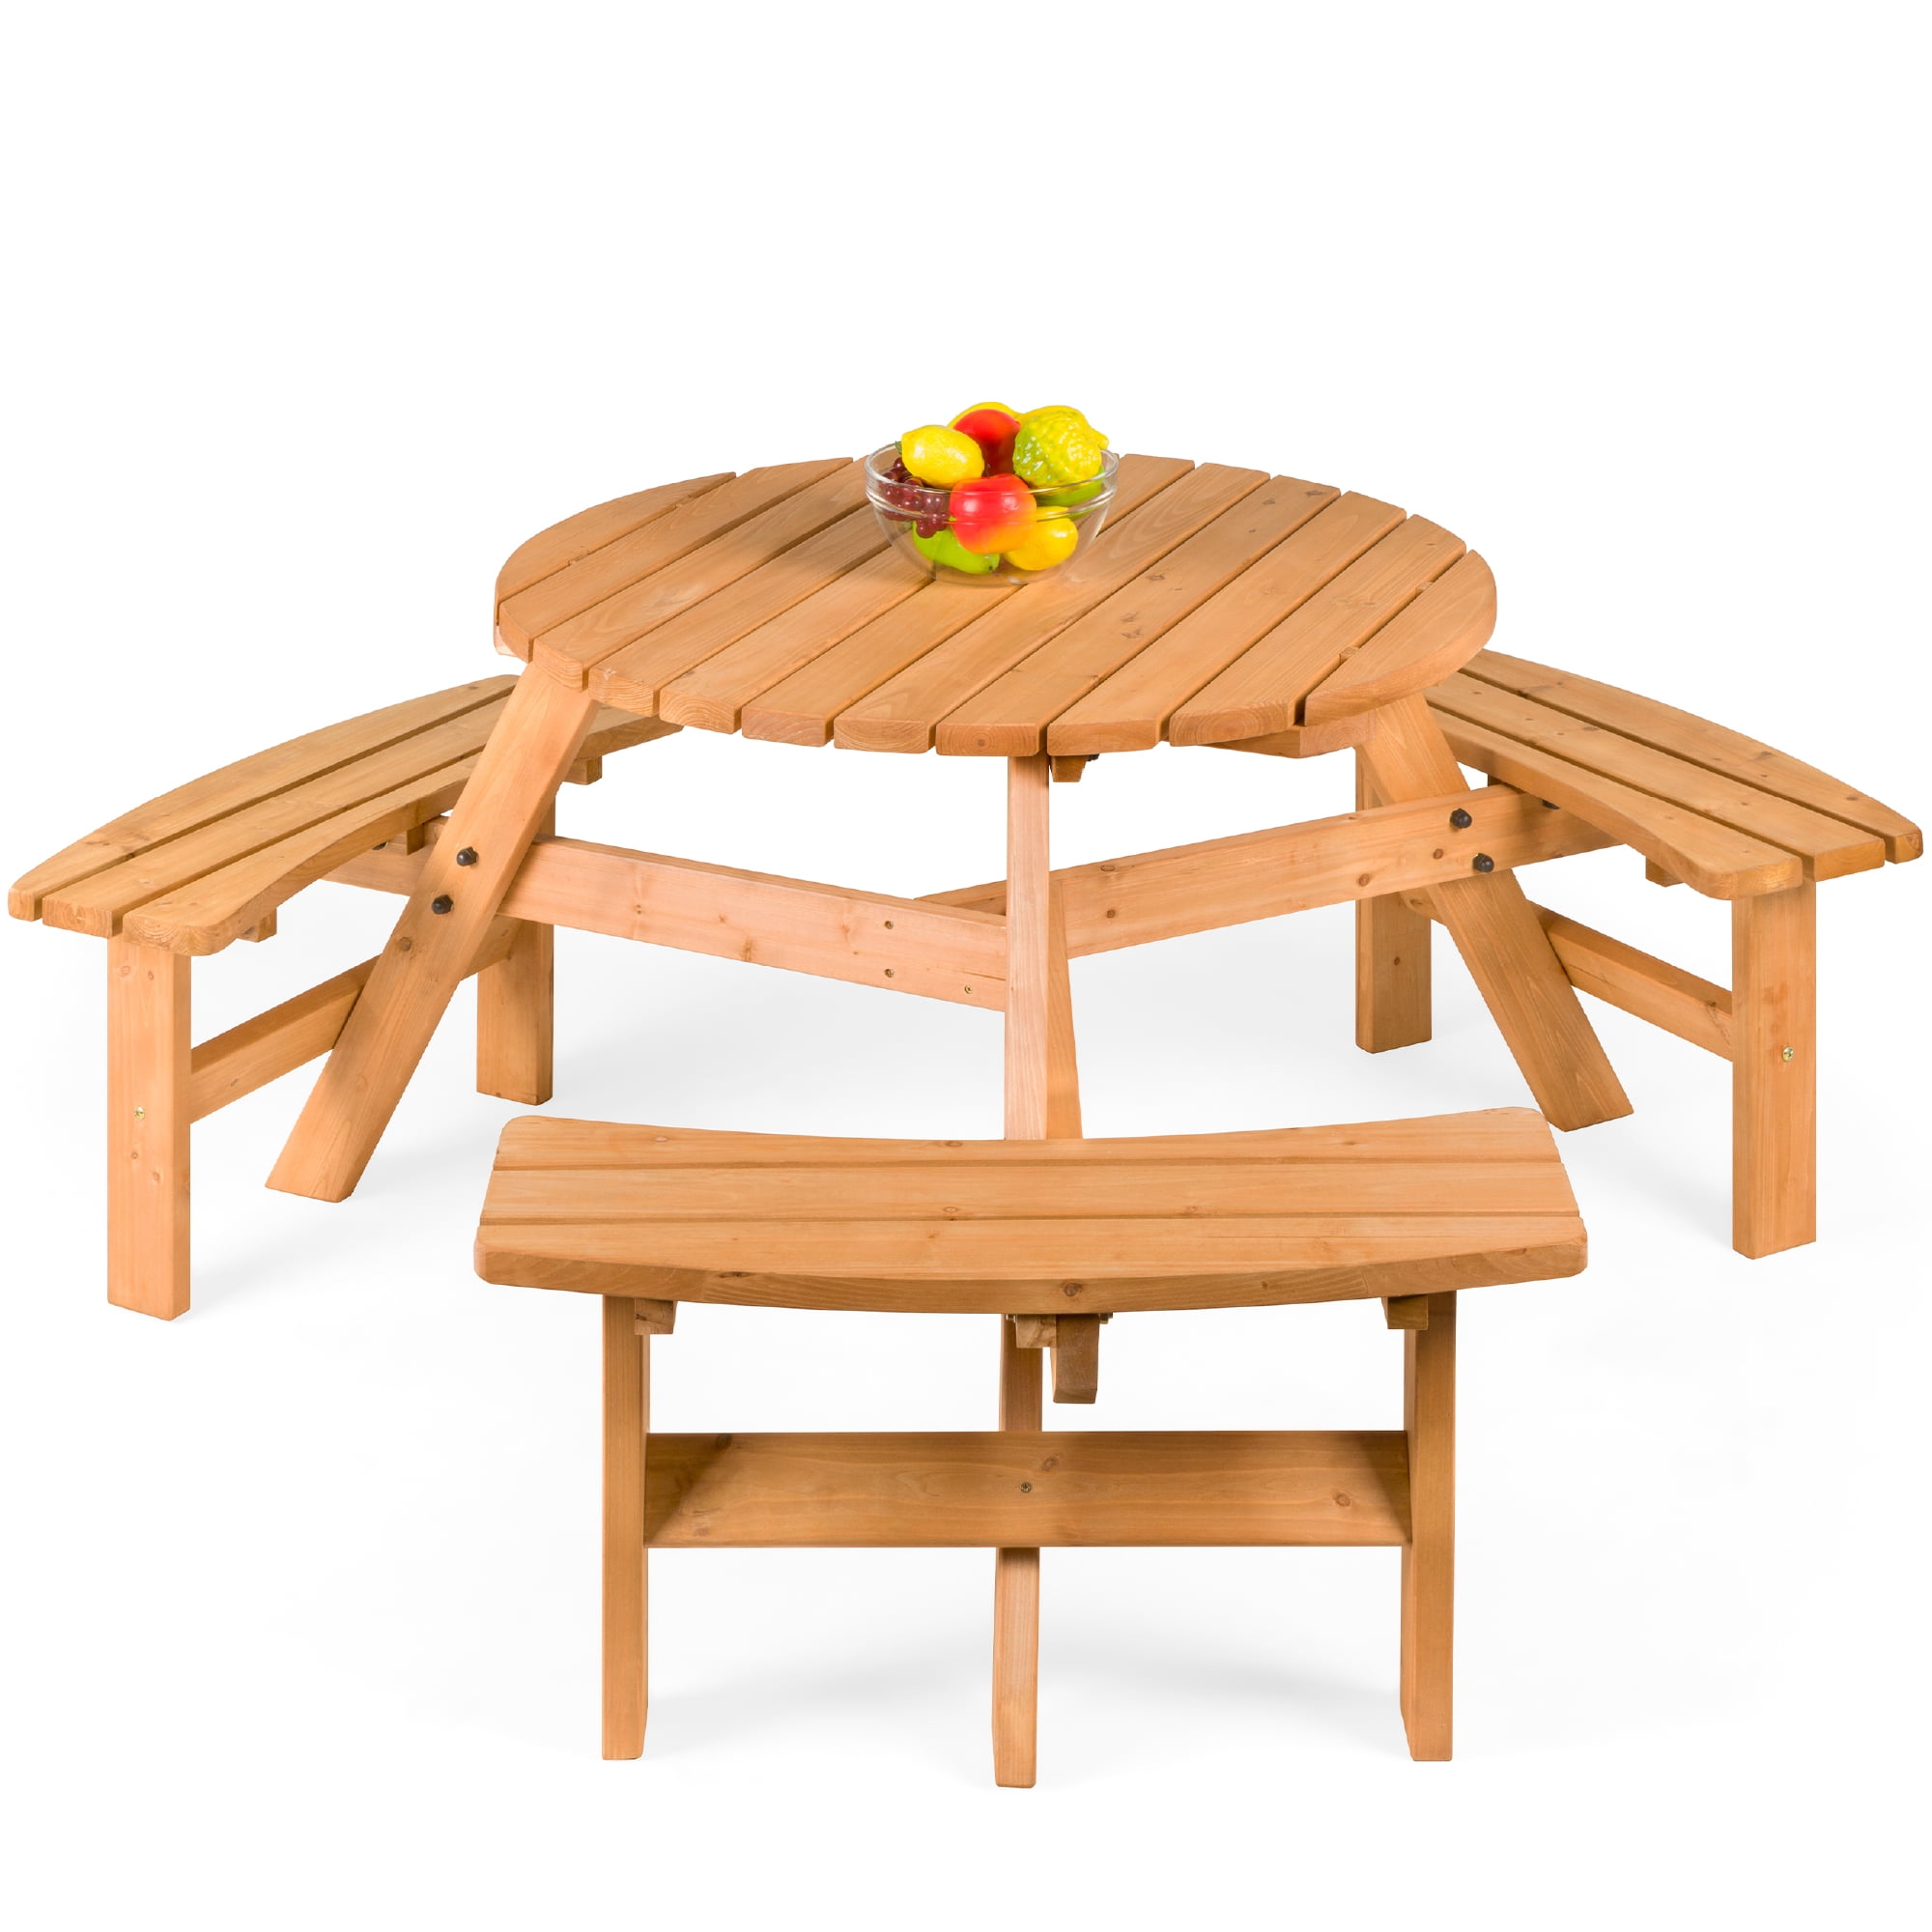 Circular Outdoor Wooden Picnic Table, Wooden Outdoor Table With Umbrella Hole